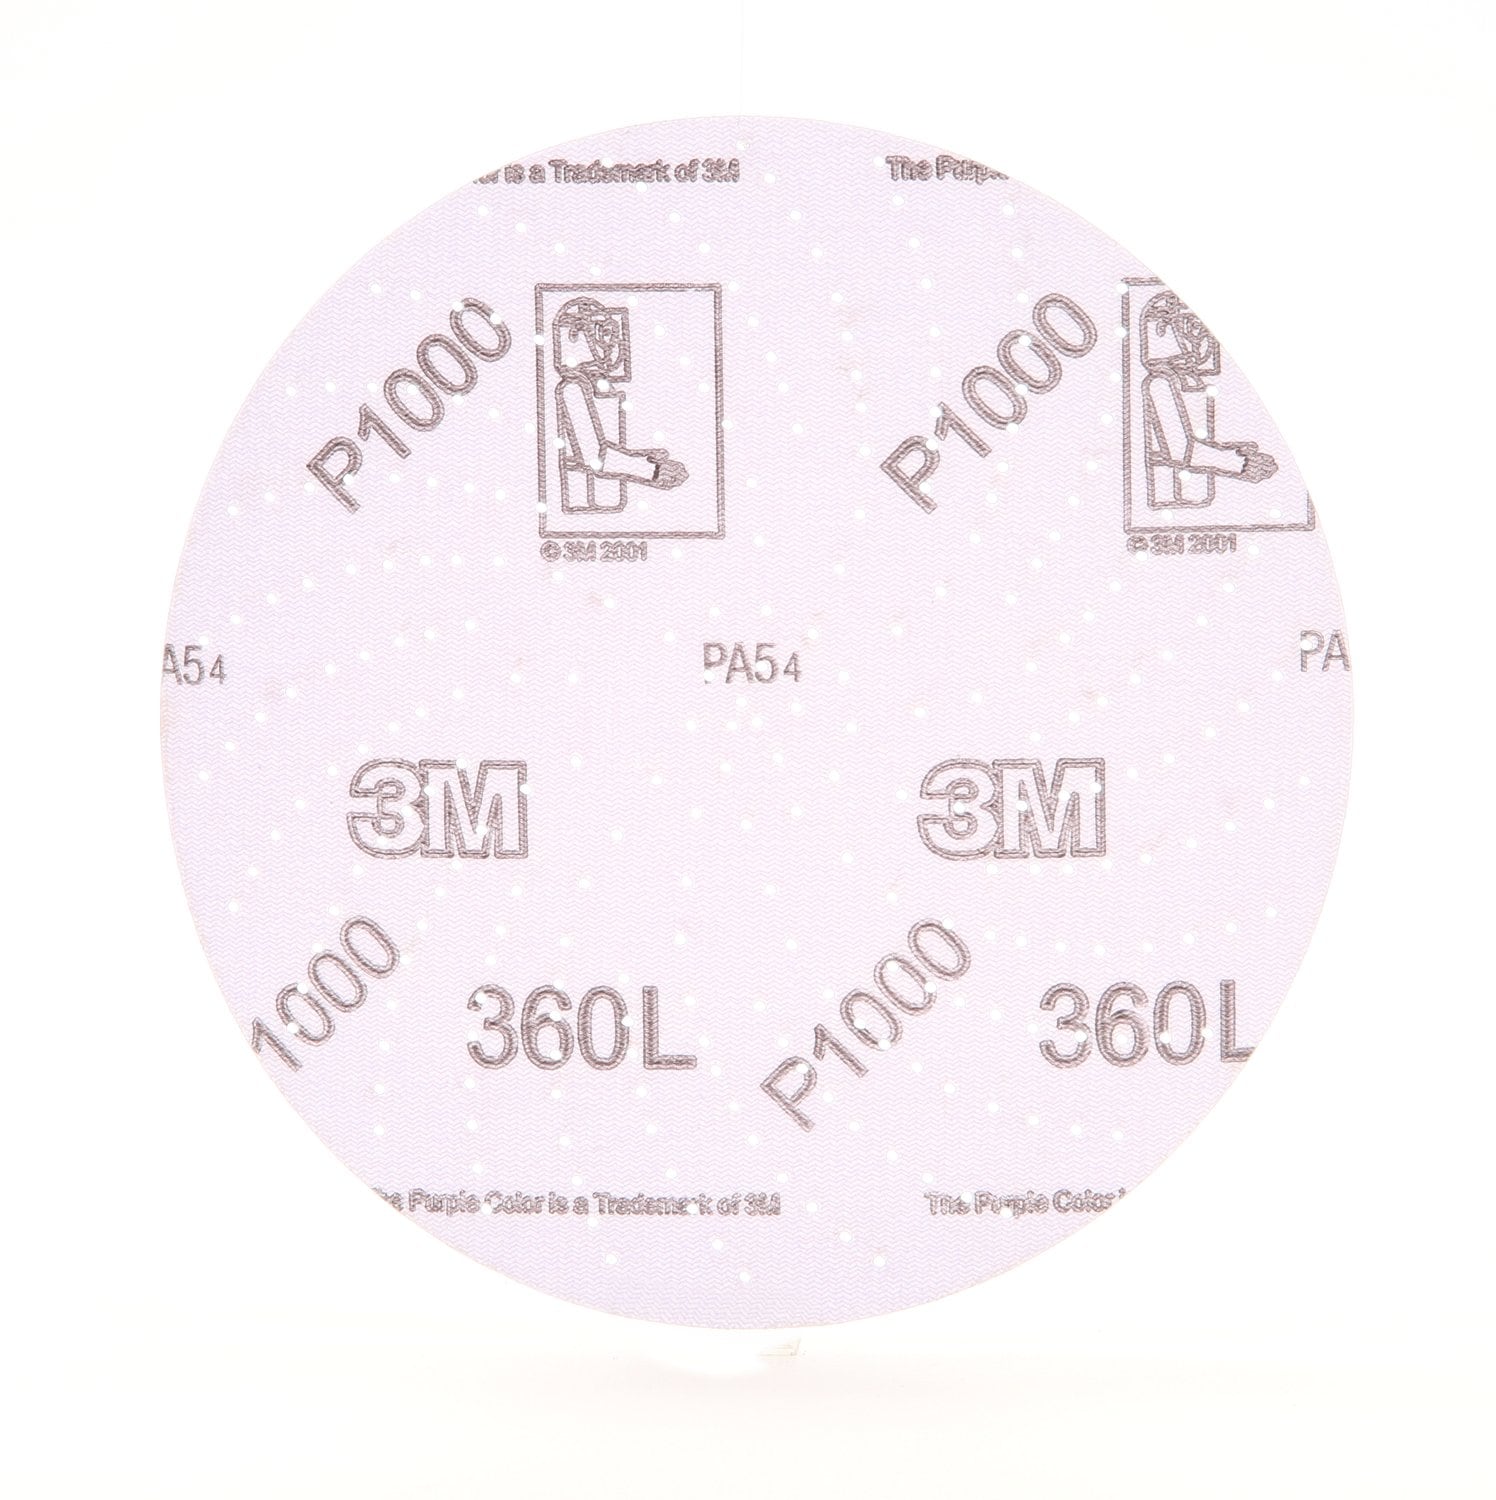 7100077975 - 3M Xtract Film Disc 360L, P1000 3MIL, 6 in, Die 600LG, 100/Carton, 500
ea/Case